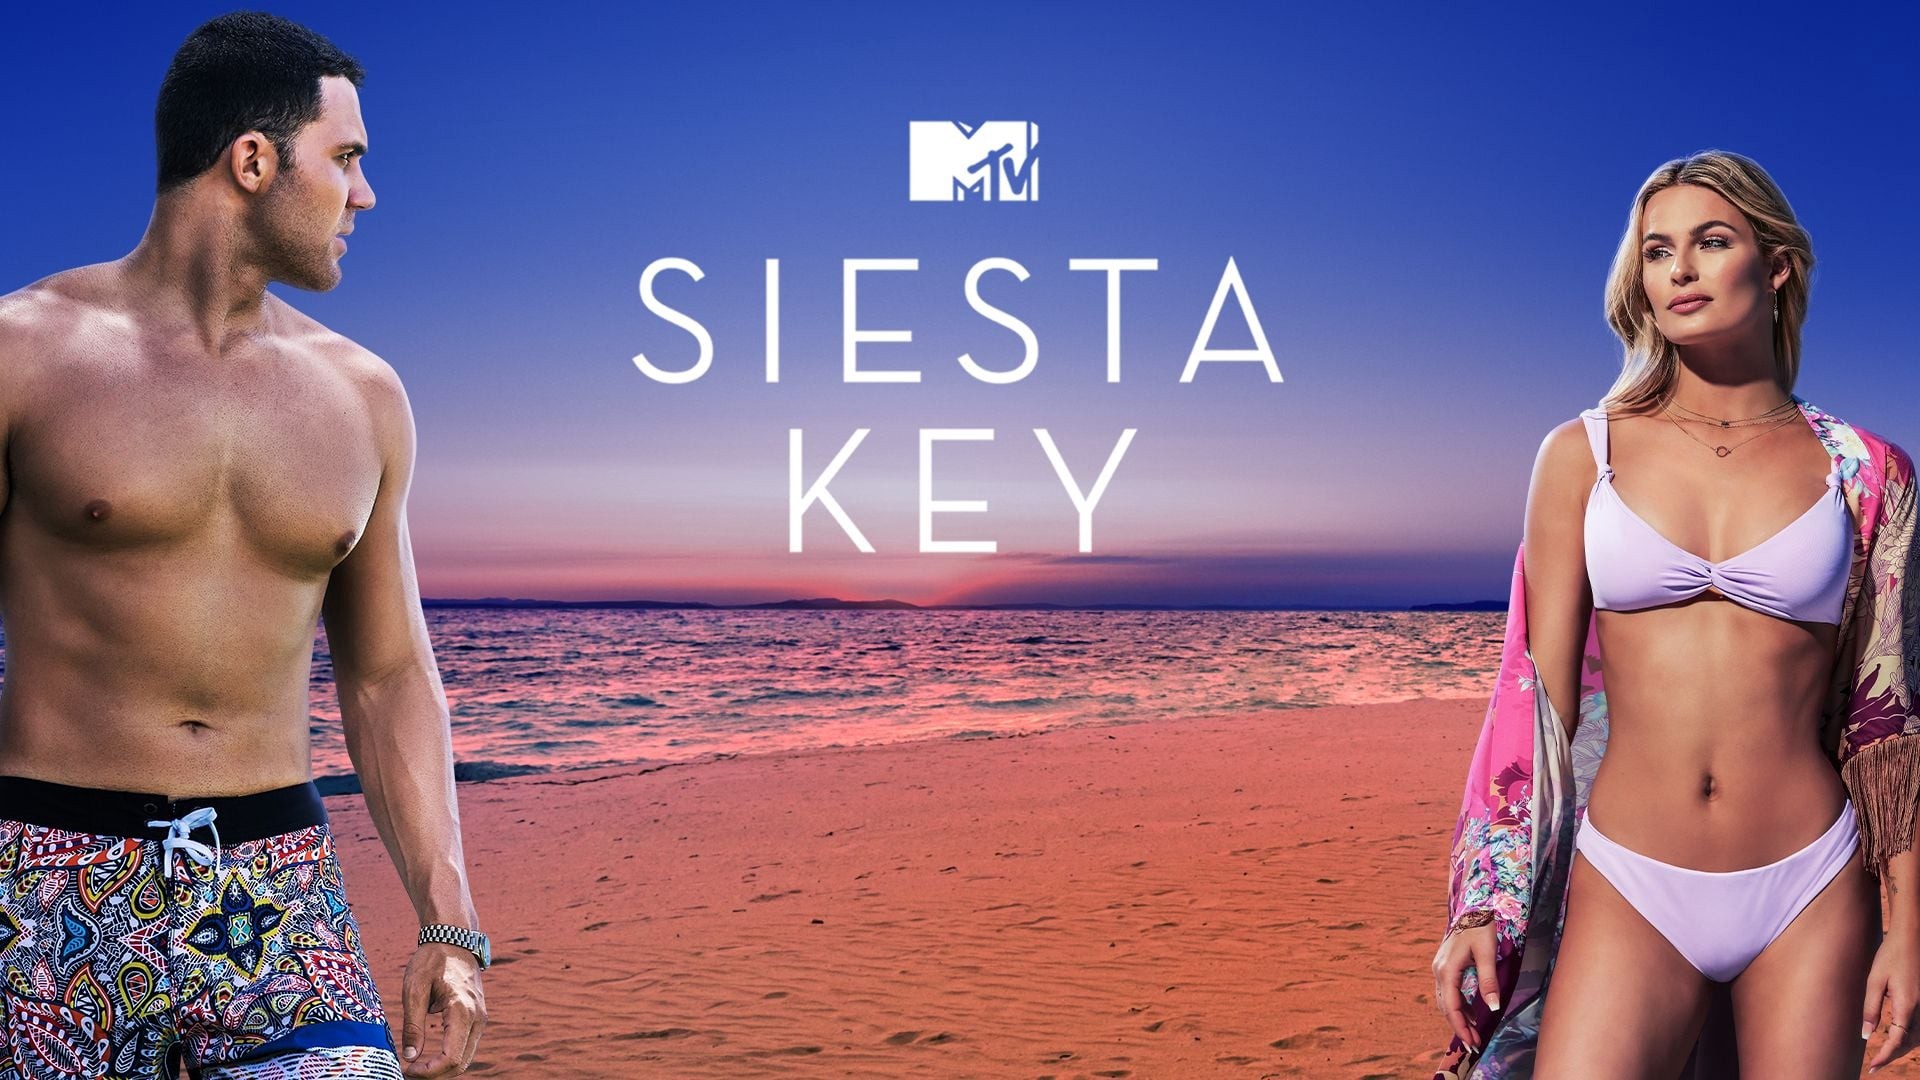 How to watch Siesta Key Season 4 Episode 7 online Free? 